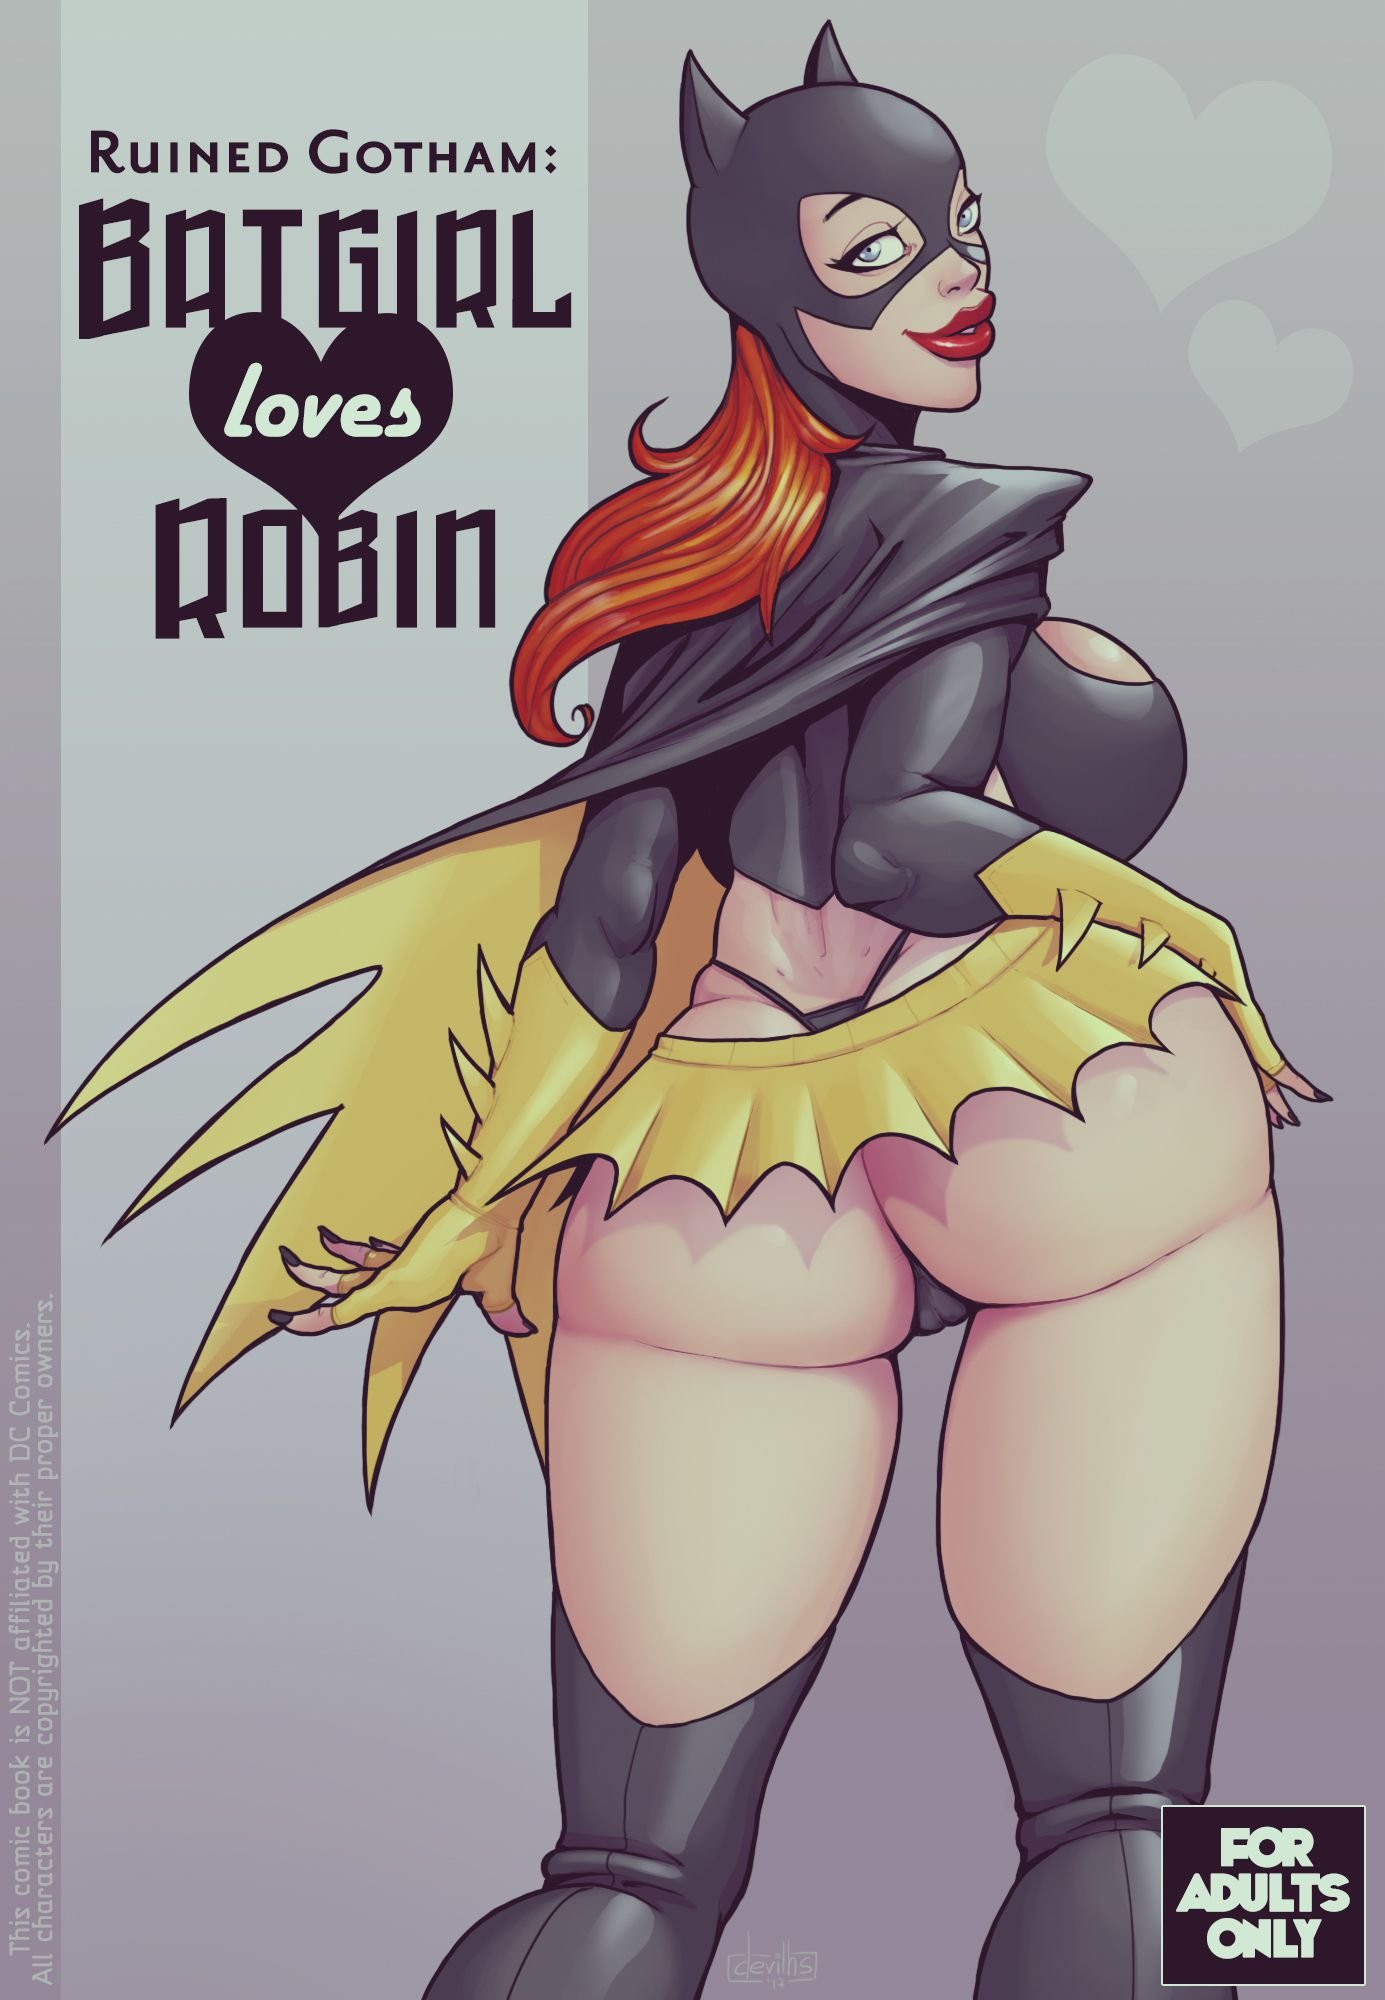 Batgirl Shemale Porn - Ruined Gotham - Batgirl Loves Robin (Batman) [DevilHS] Porn Comic -  AllPornComic